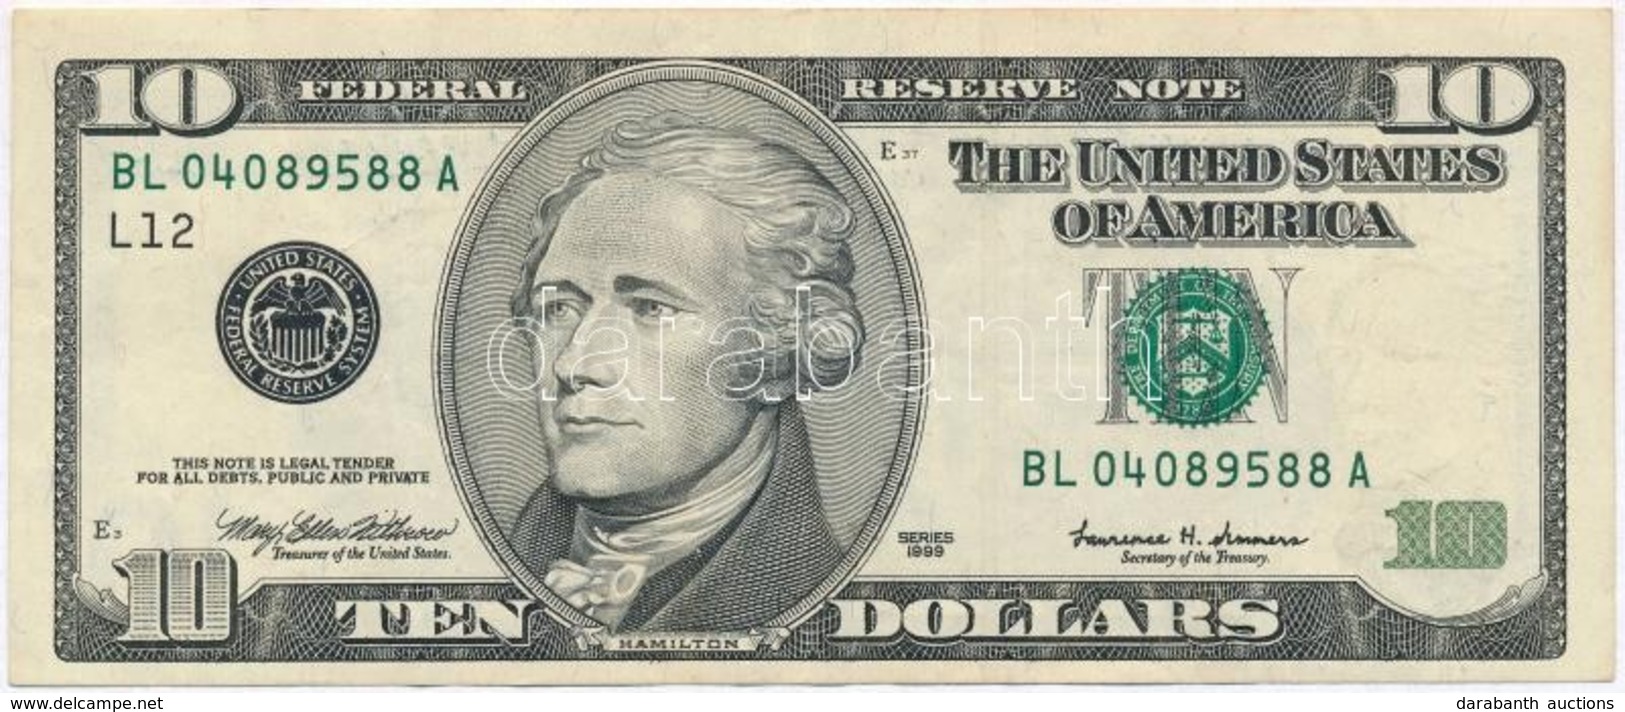 Amerikai Egyesült Államok 1999-2001. (1999) 10$ 'Federal Reserve Note' 'Mary Ellen Withrow - Lawrence H. Summers' T:III  - Zonder Classificatie